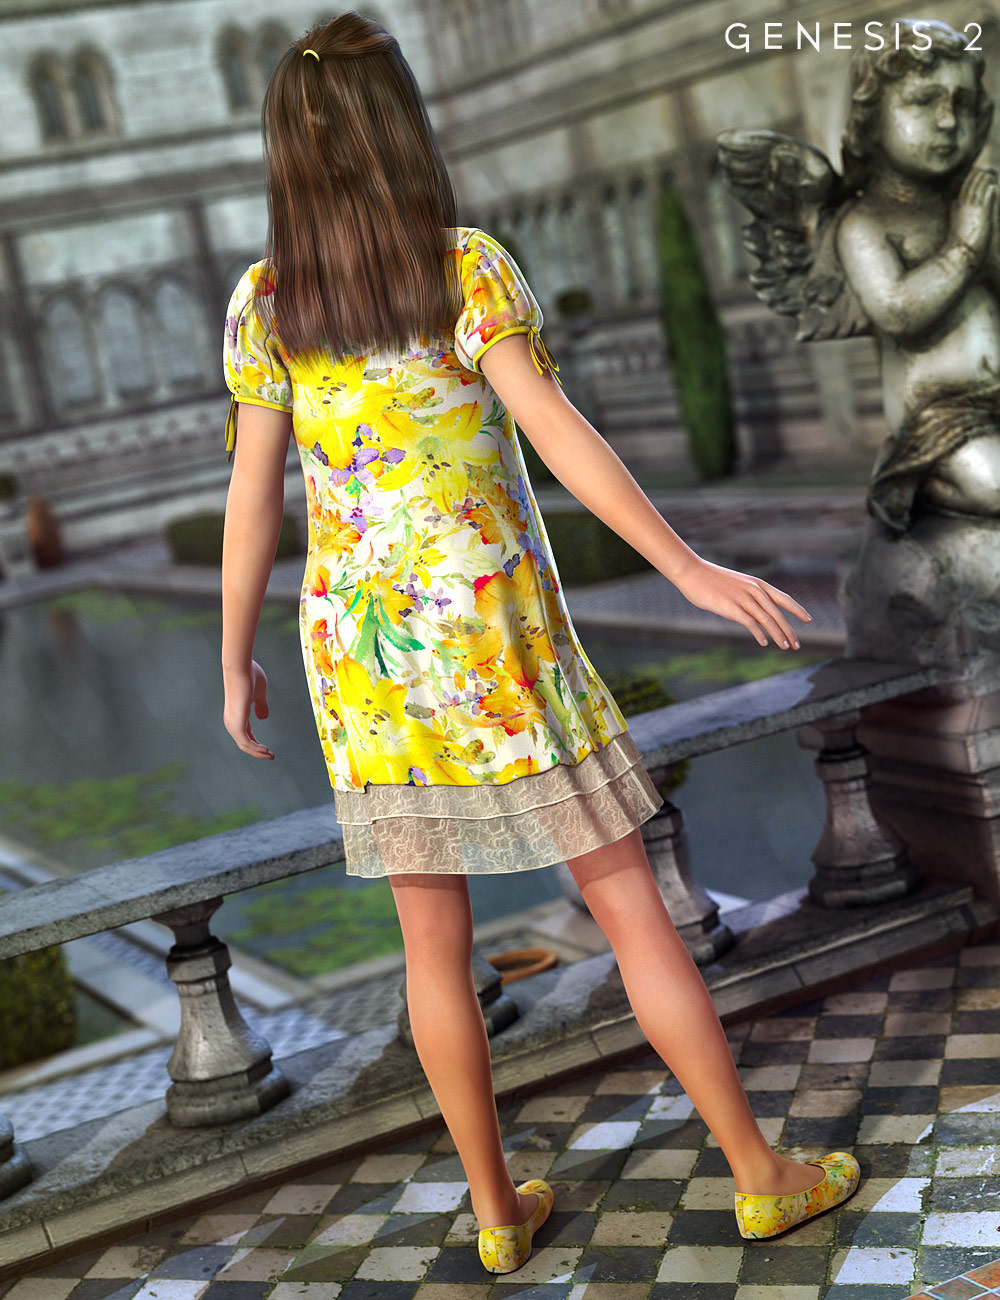 Memories of Summer for Genesis 2 Female(s) by: 4blueyes, 3D Models by Daz 3D